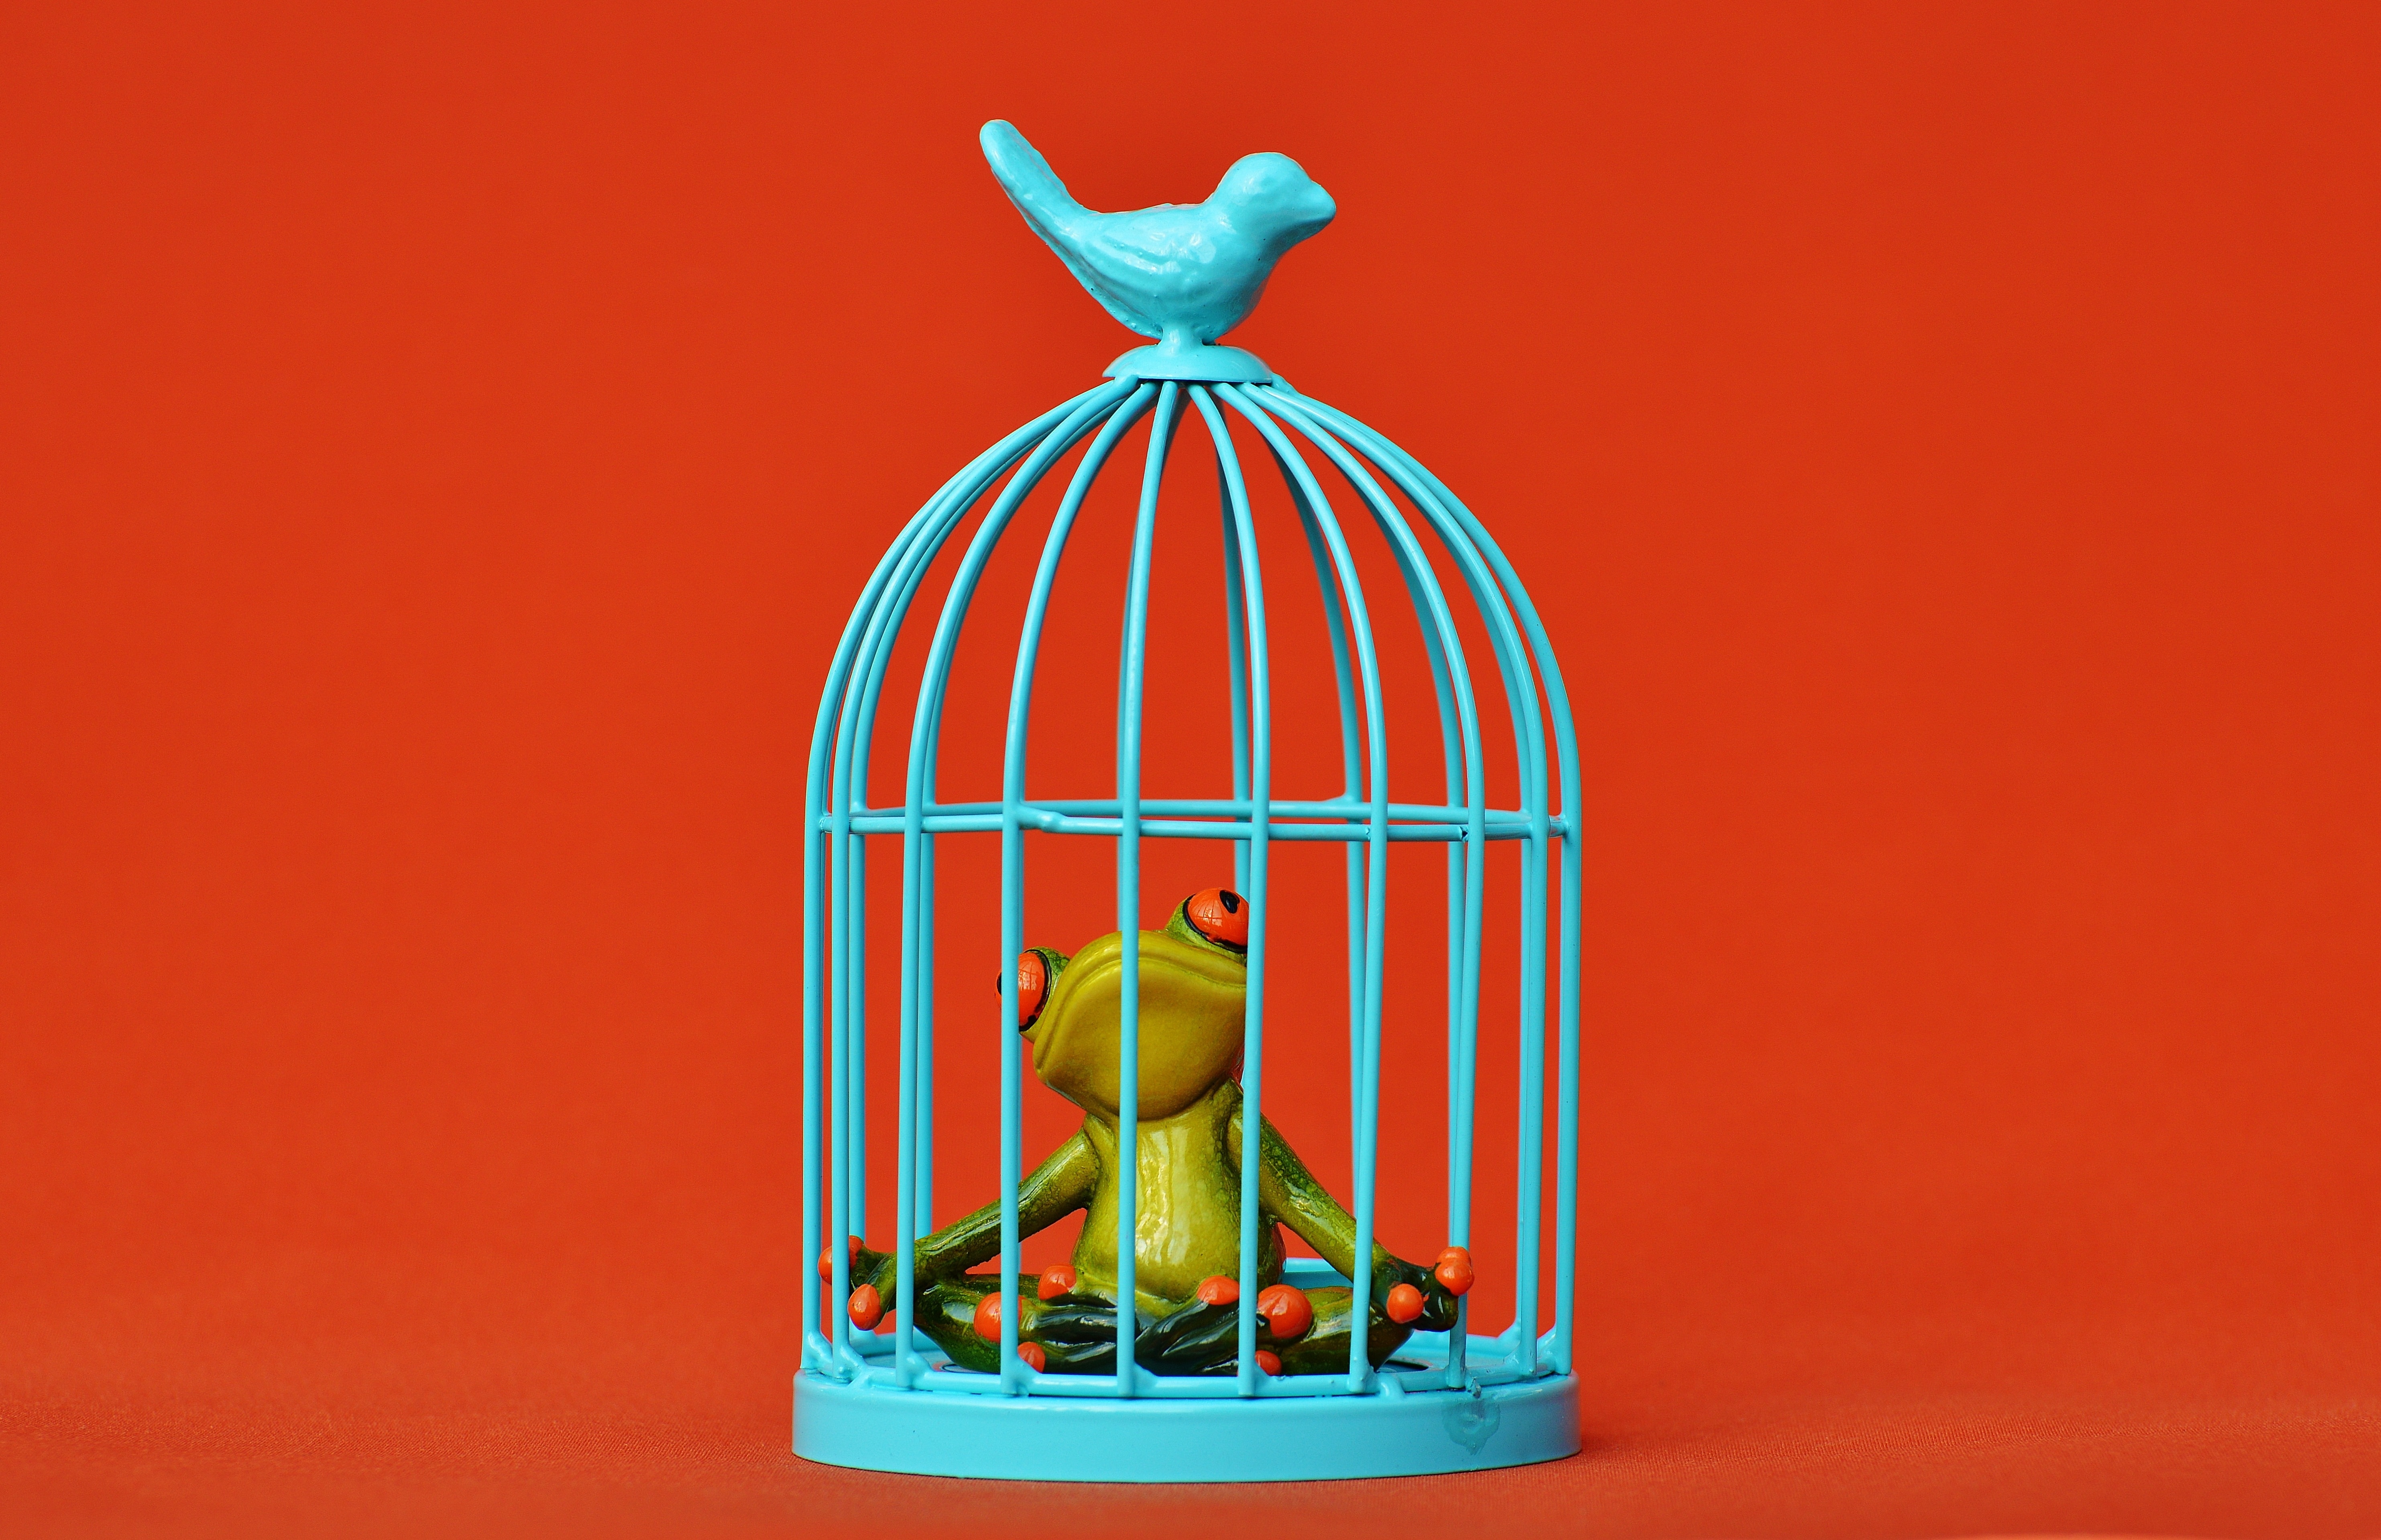 Frog, Sad, Funny, Imprisoned, Fig, Cage, single object, no people